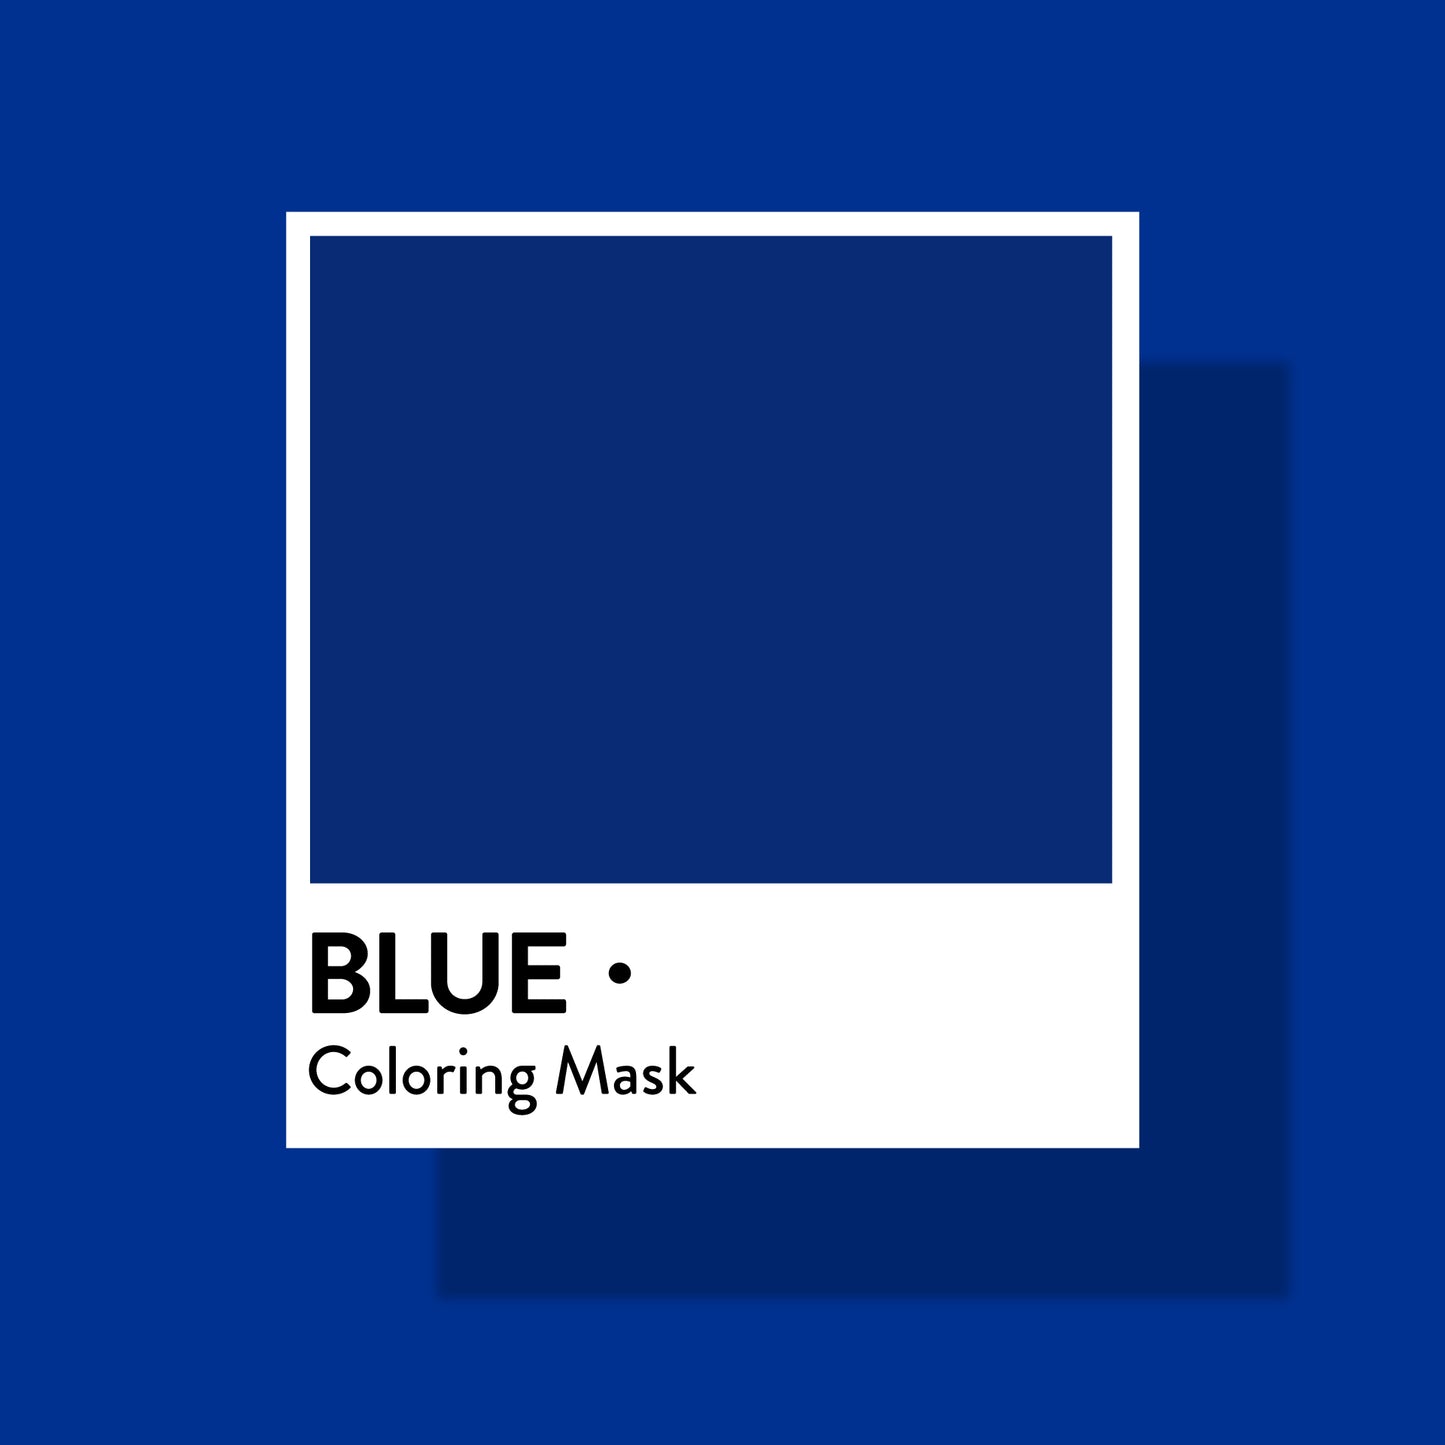 RETAIL COLOREFRESH BLUE COLORING MASK